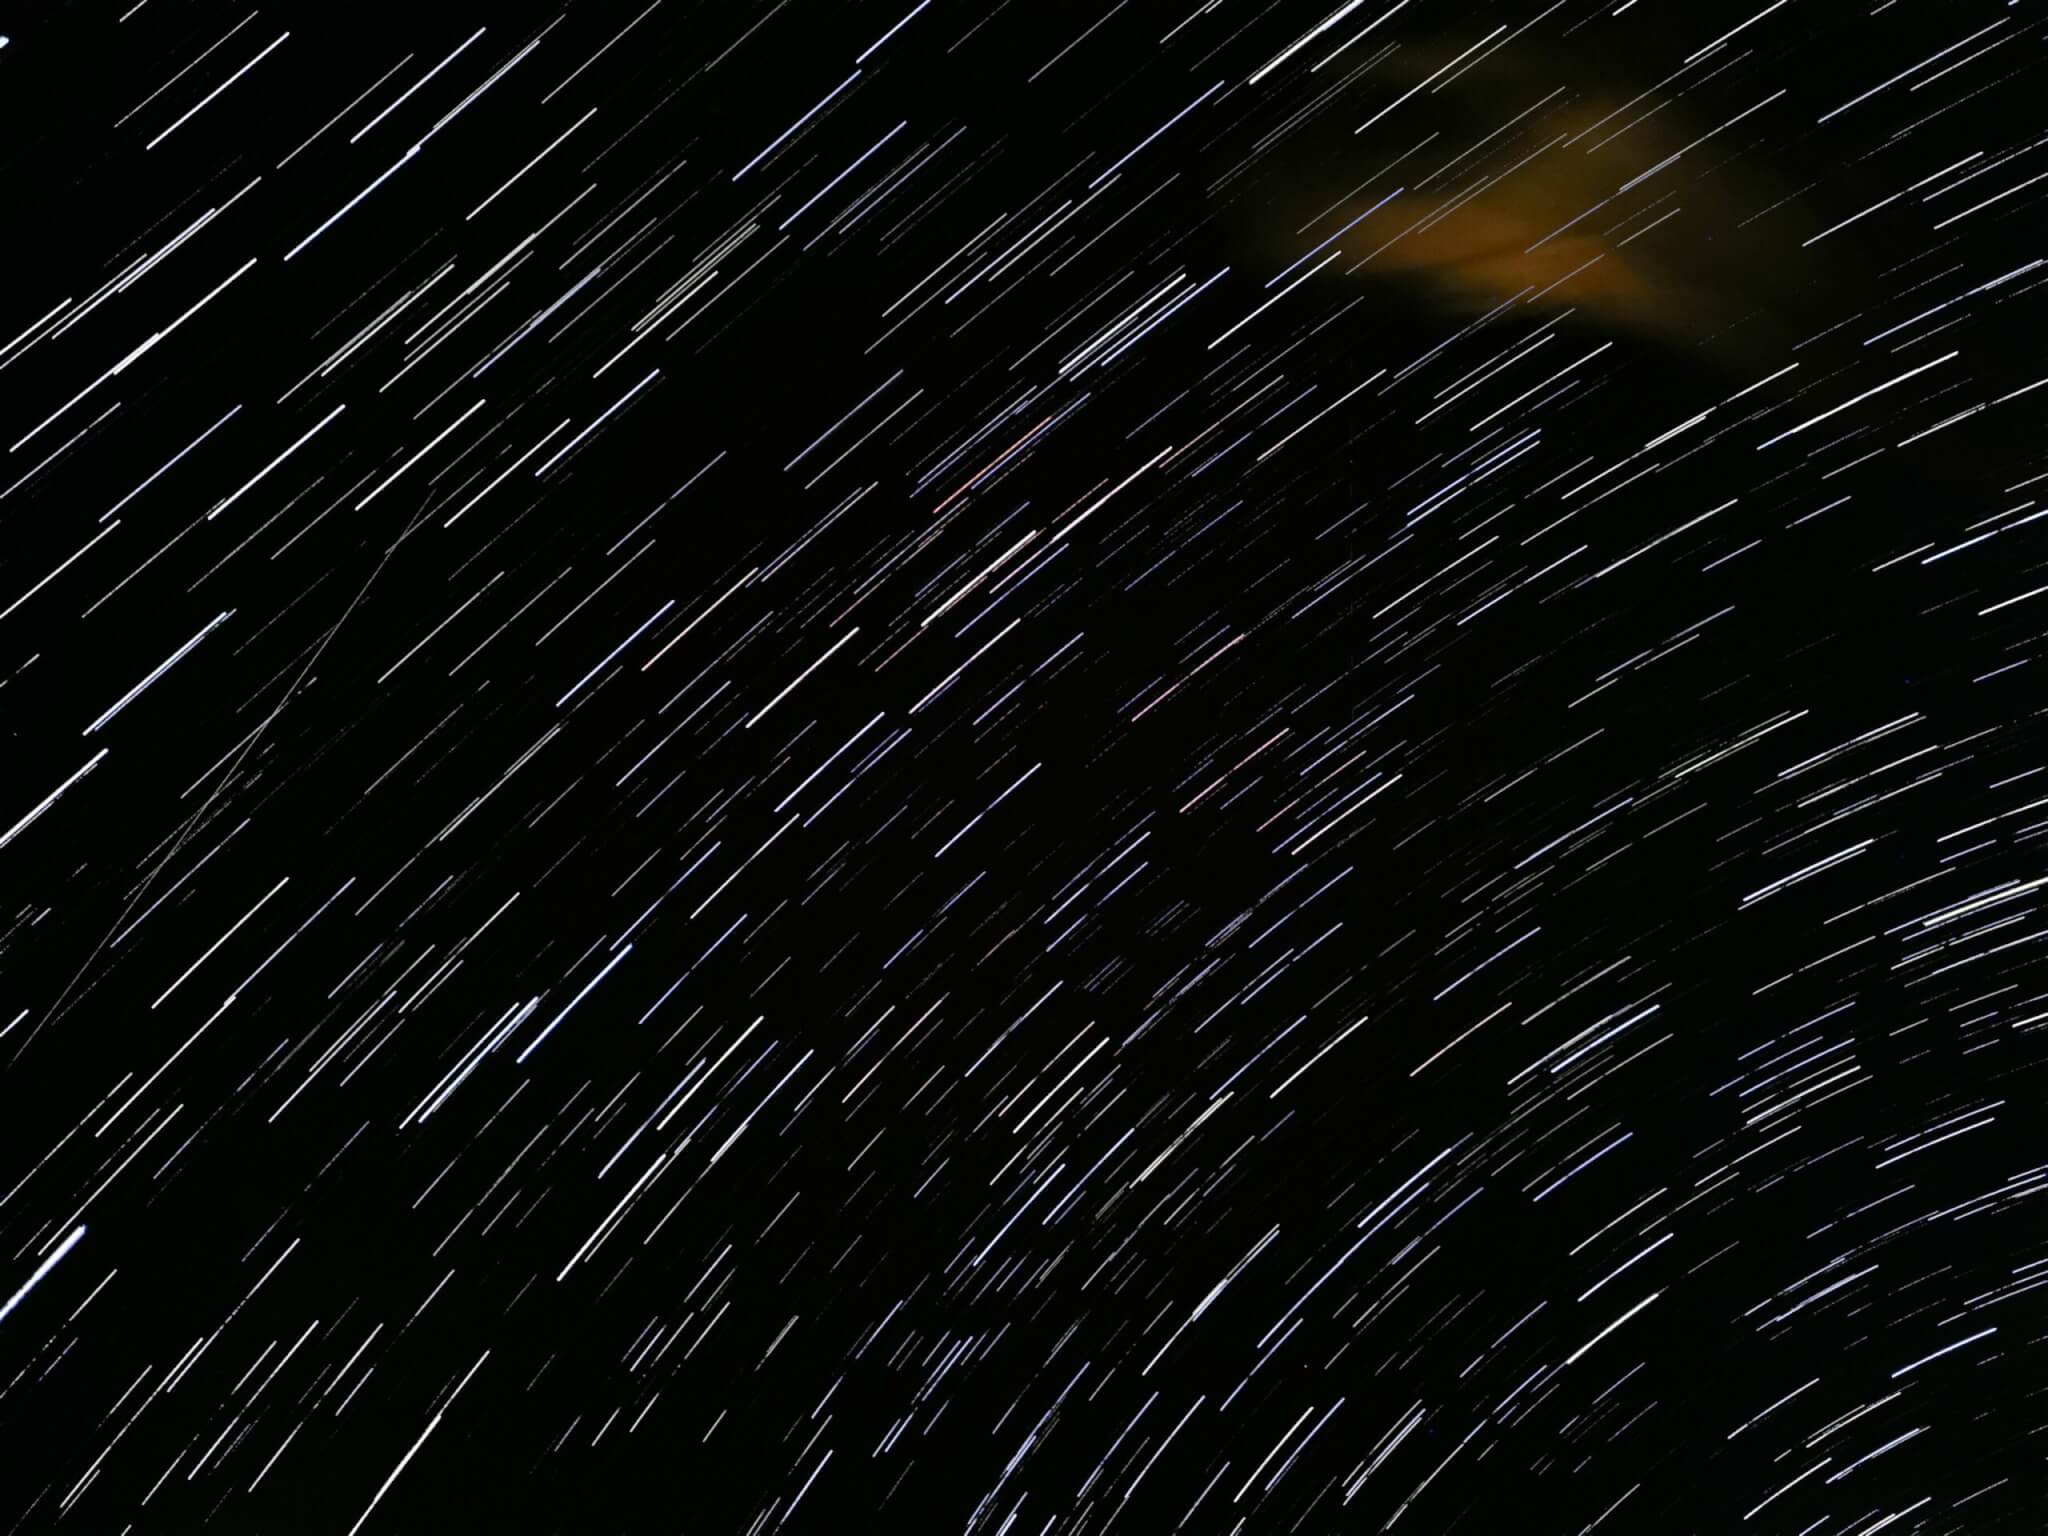 Motion shot of the blurred stars above Uluru mountain, Australia